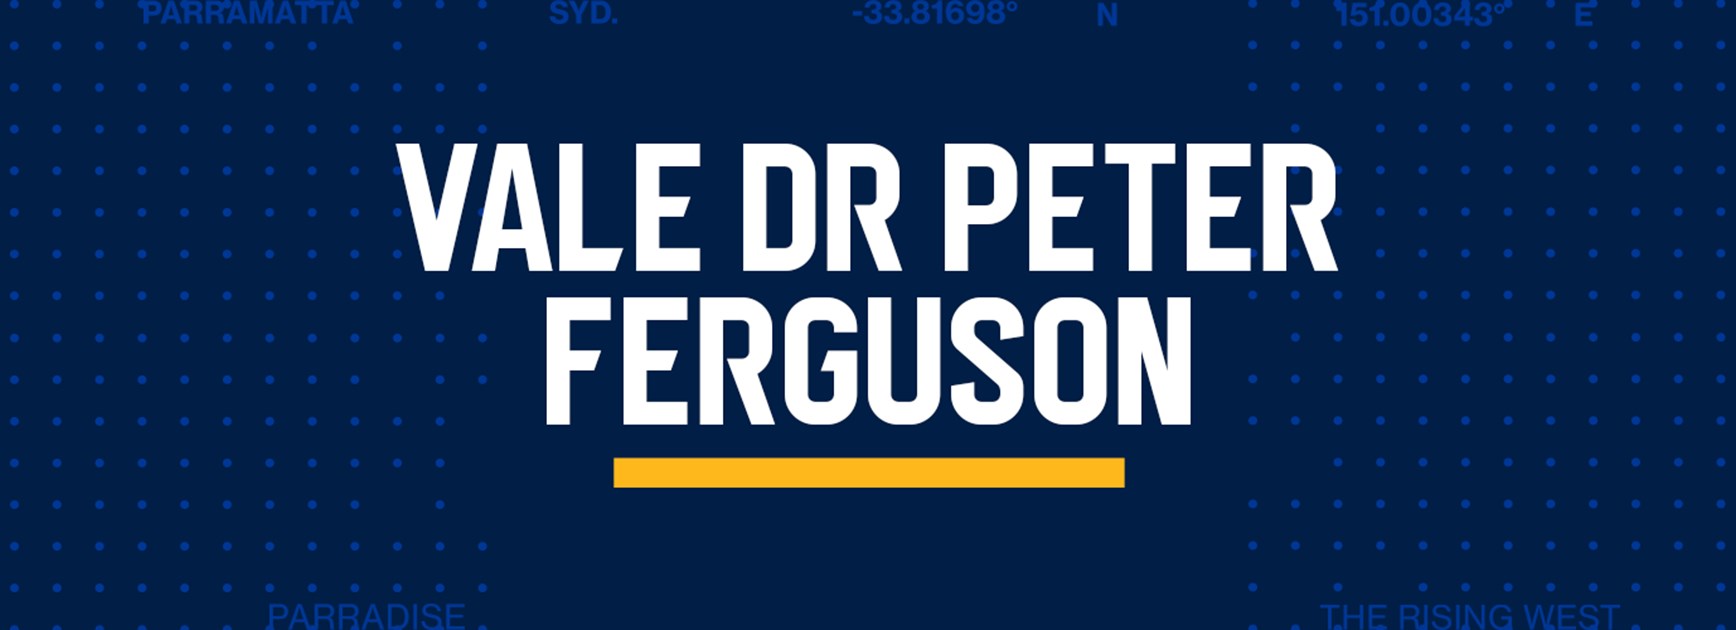 Vale Dr Peter Ferguson